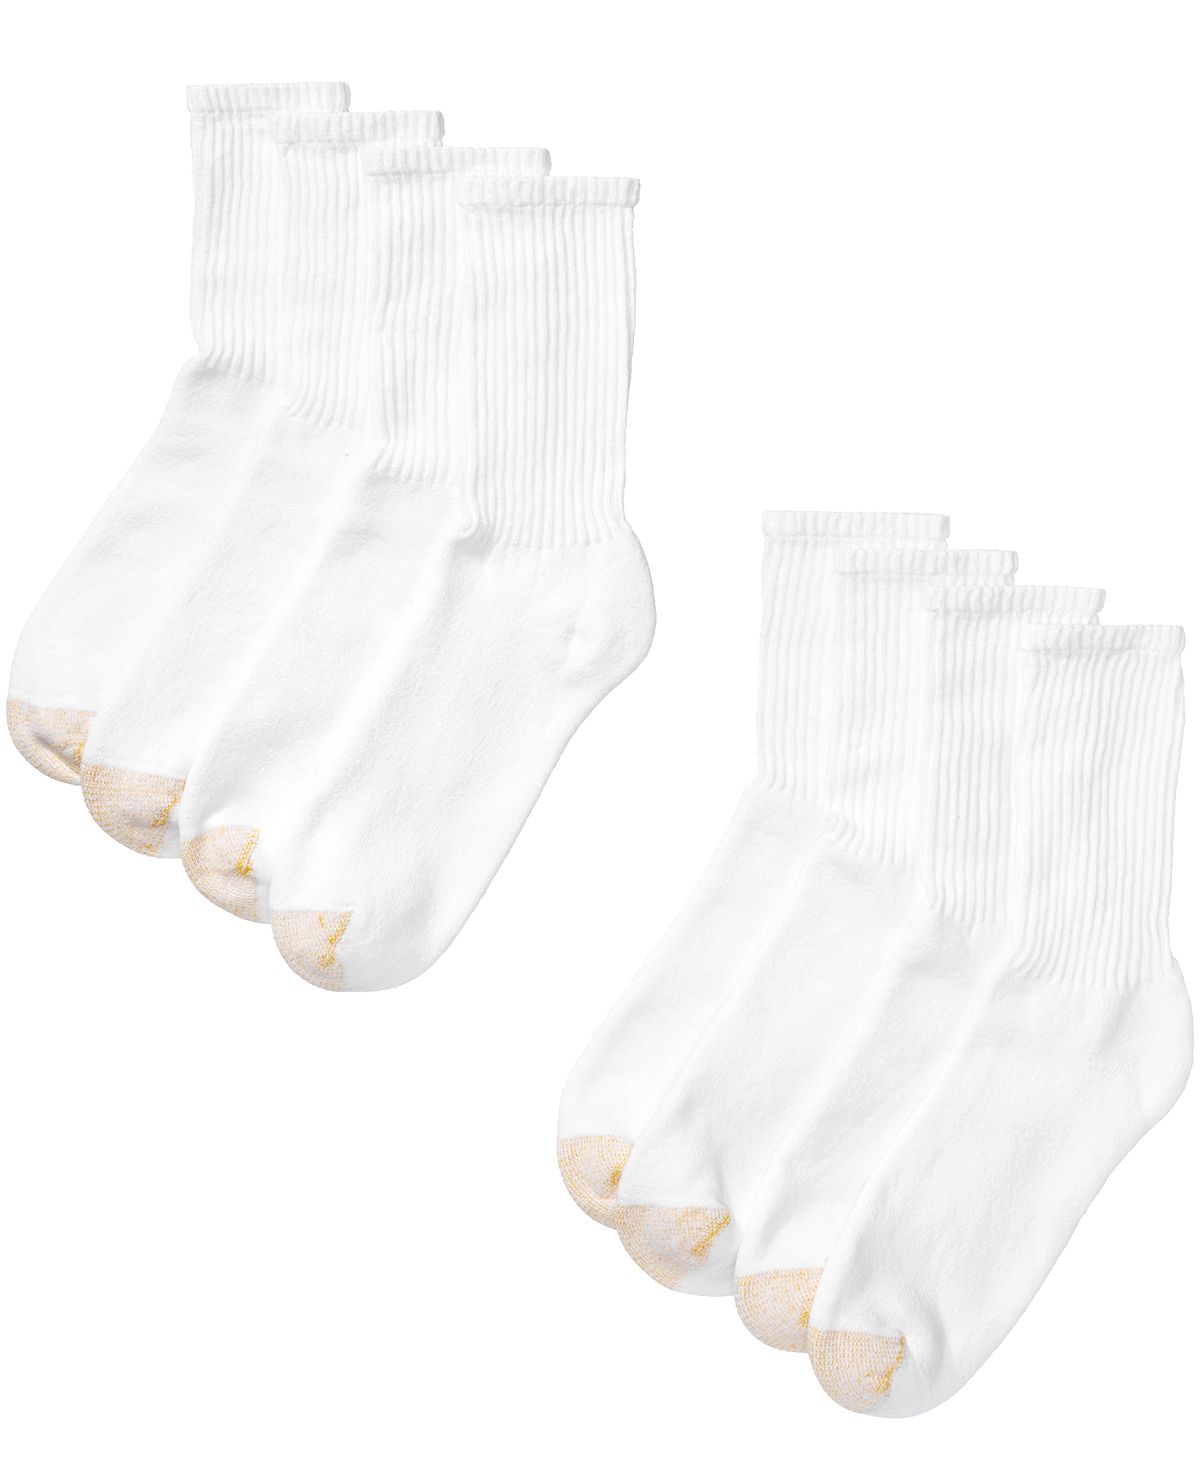 Набор из 8 мужских спортивных носков Gold Toe набор из двух пар мужских спортивных носков lacoste lacoste